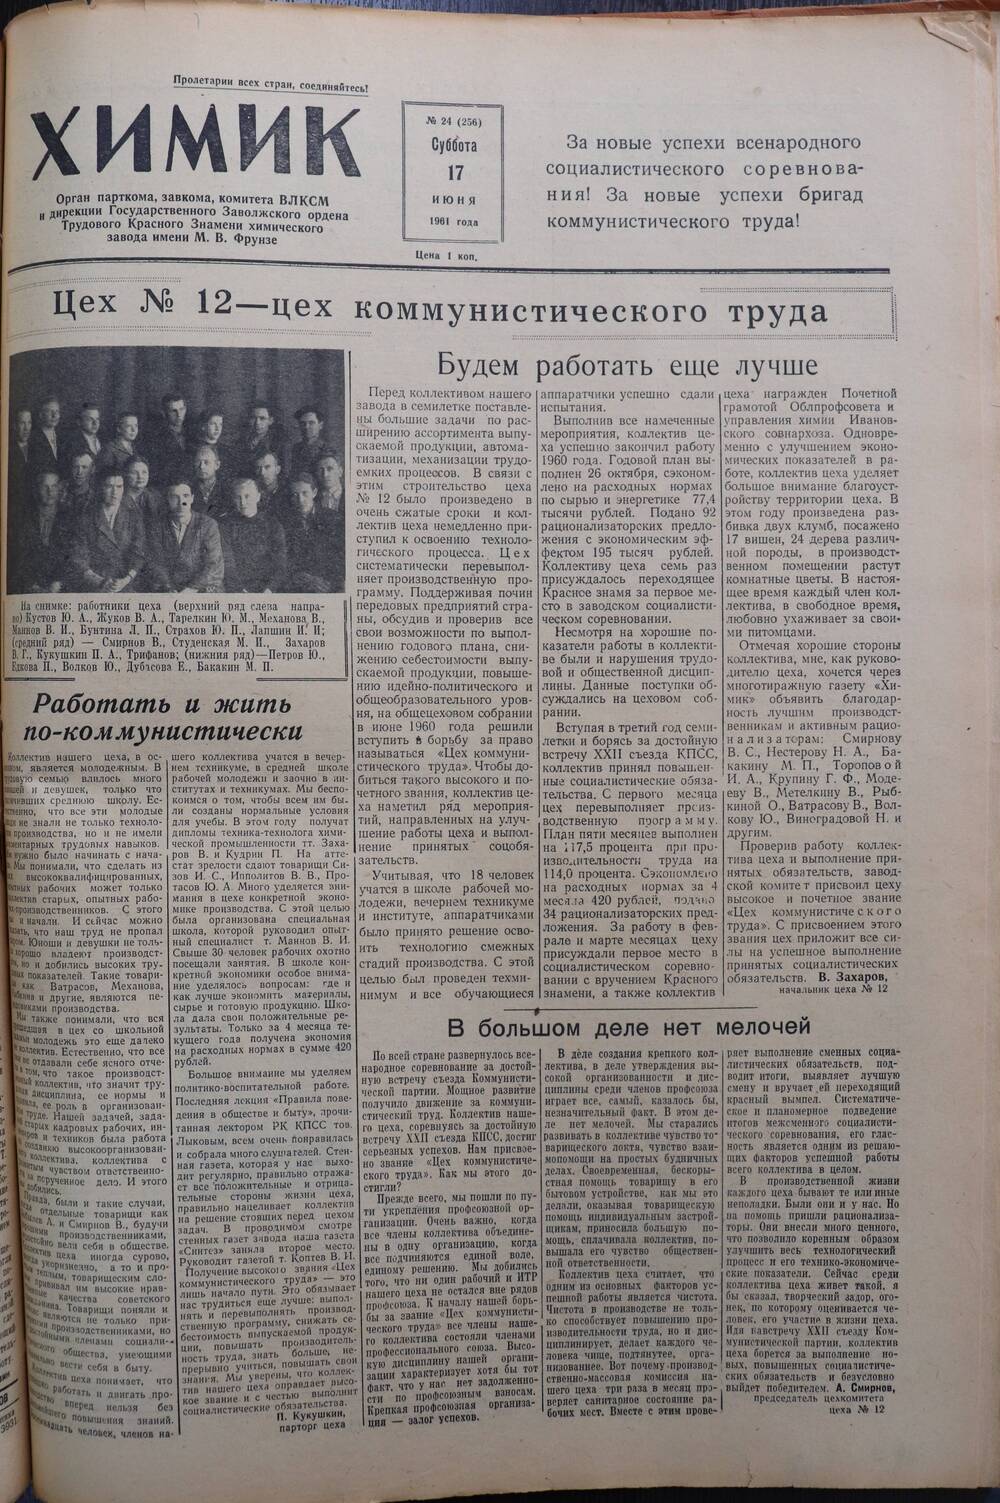 Газета «Химик» № 24 от 17 июня 1961 года.